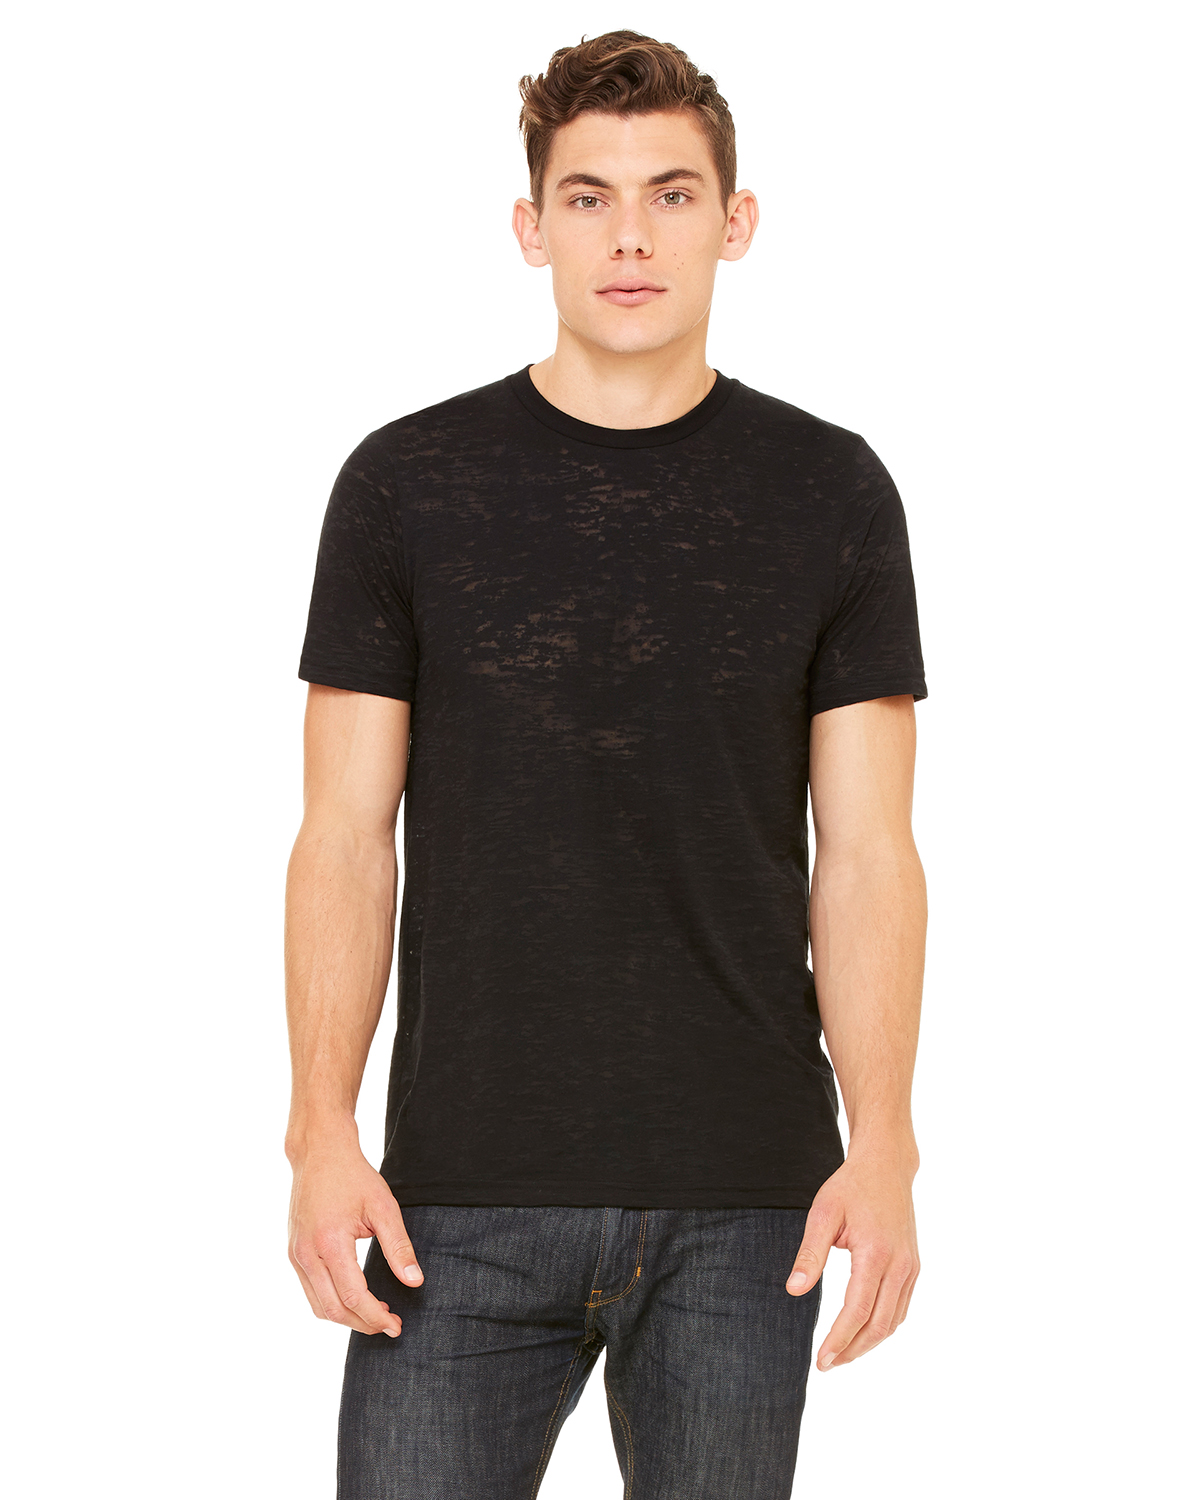 Bella 3601 - Men's Burnout Short-Sleeve Tee $9.45 - Men's T-Shirts